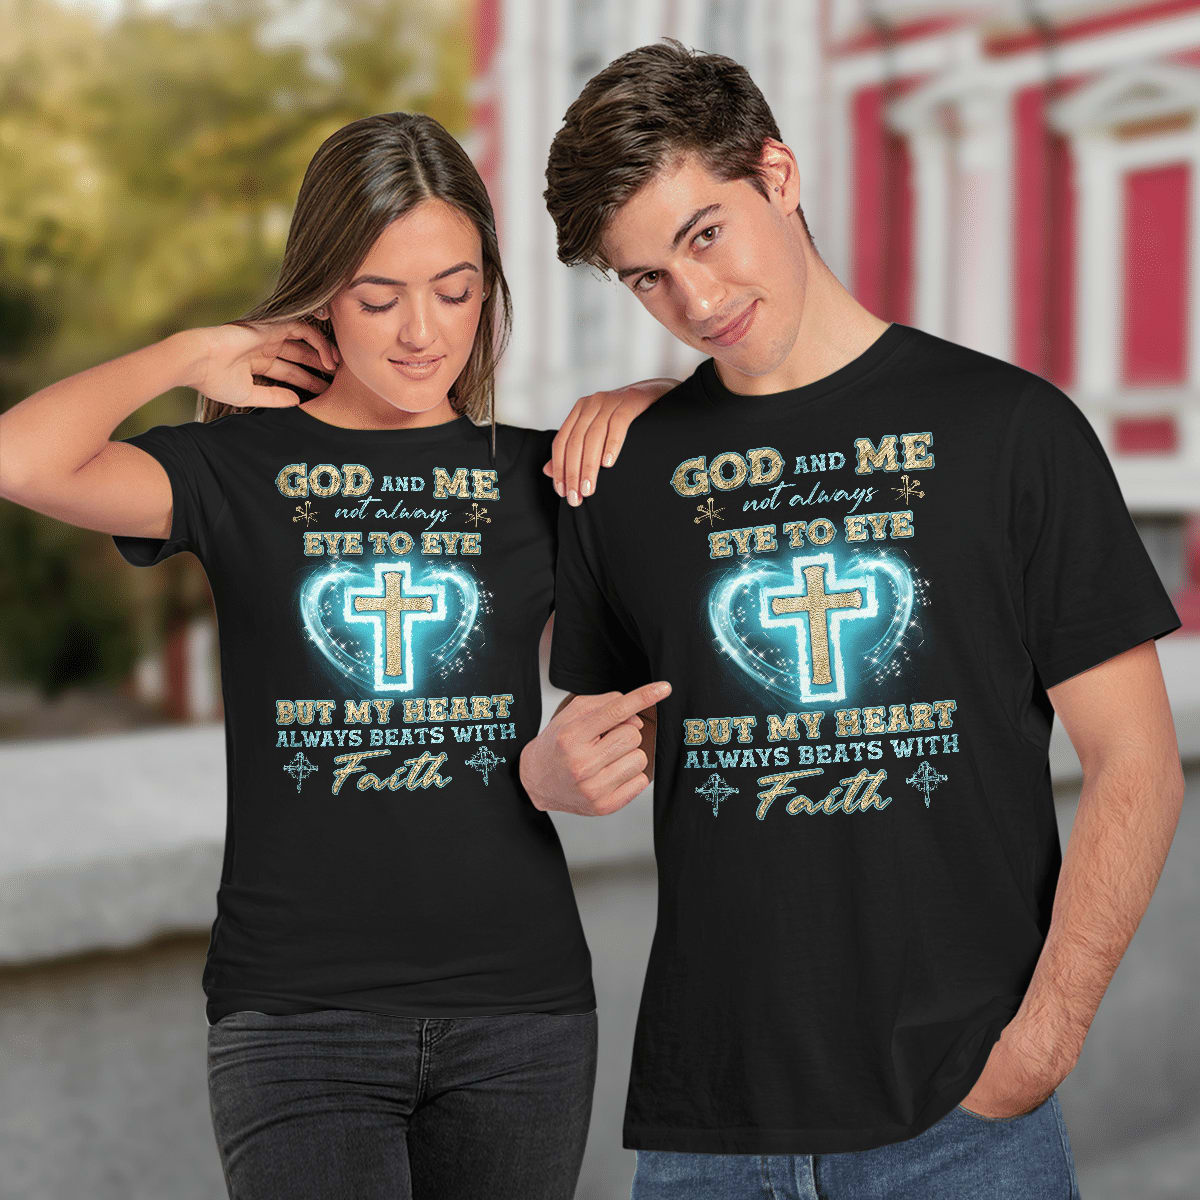 God And Me Not Always Eye To Eye But My Heart Always Beats With Faith, God T-Shirt, Jesus Sweatshirt Hoodie, Faith T-Shirt